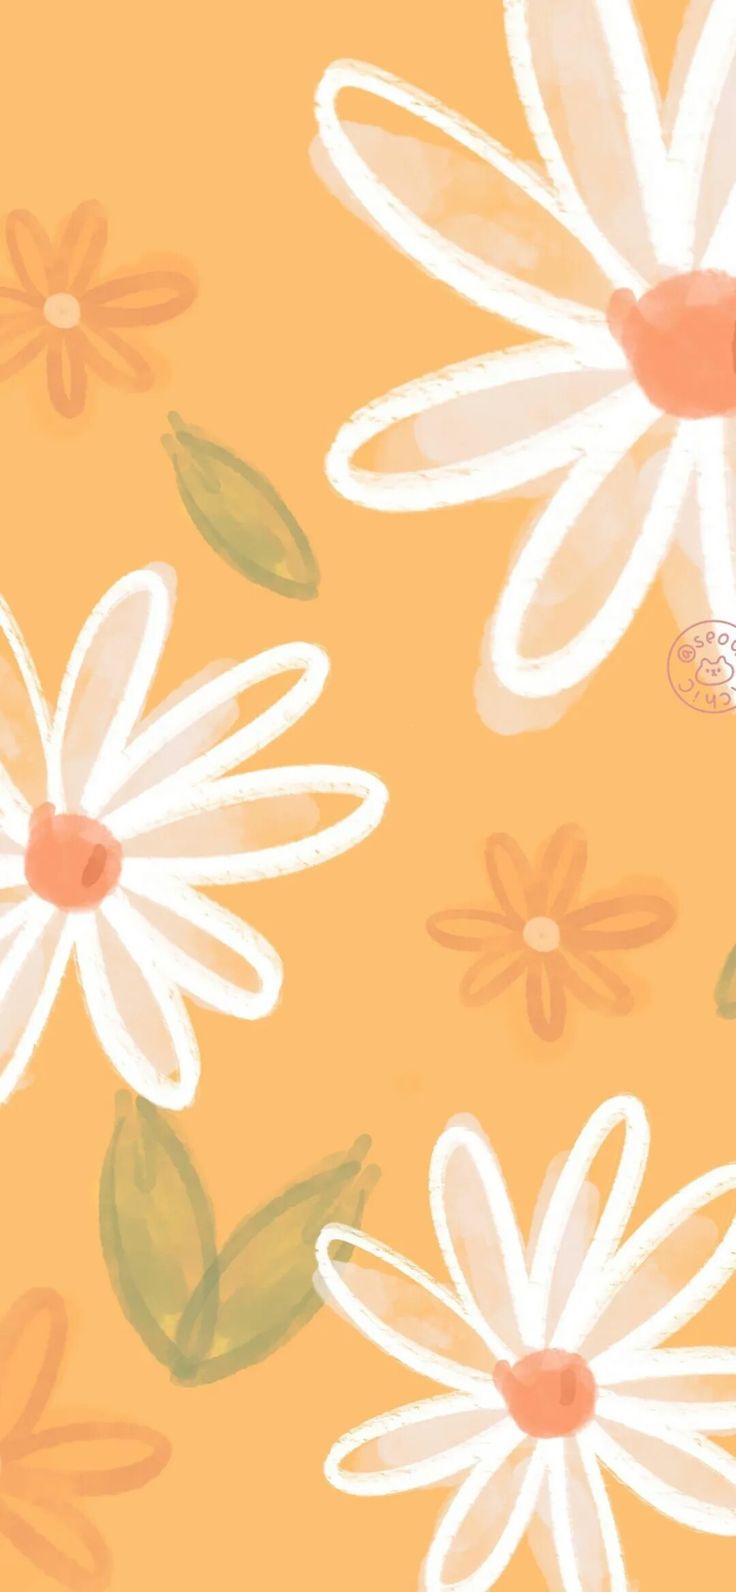 Aesthetic Flowers Cartoons Wallpapers